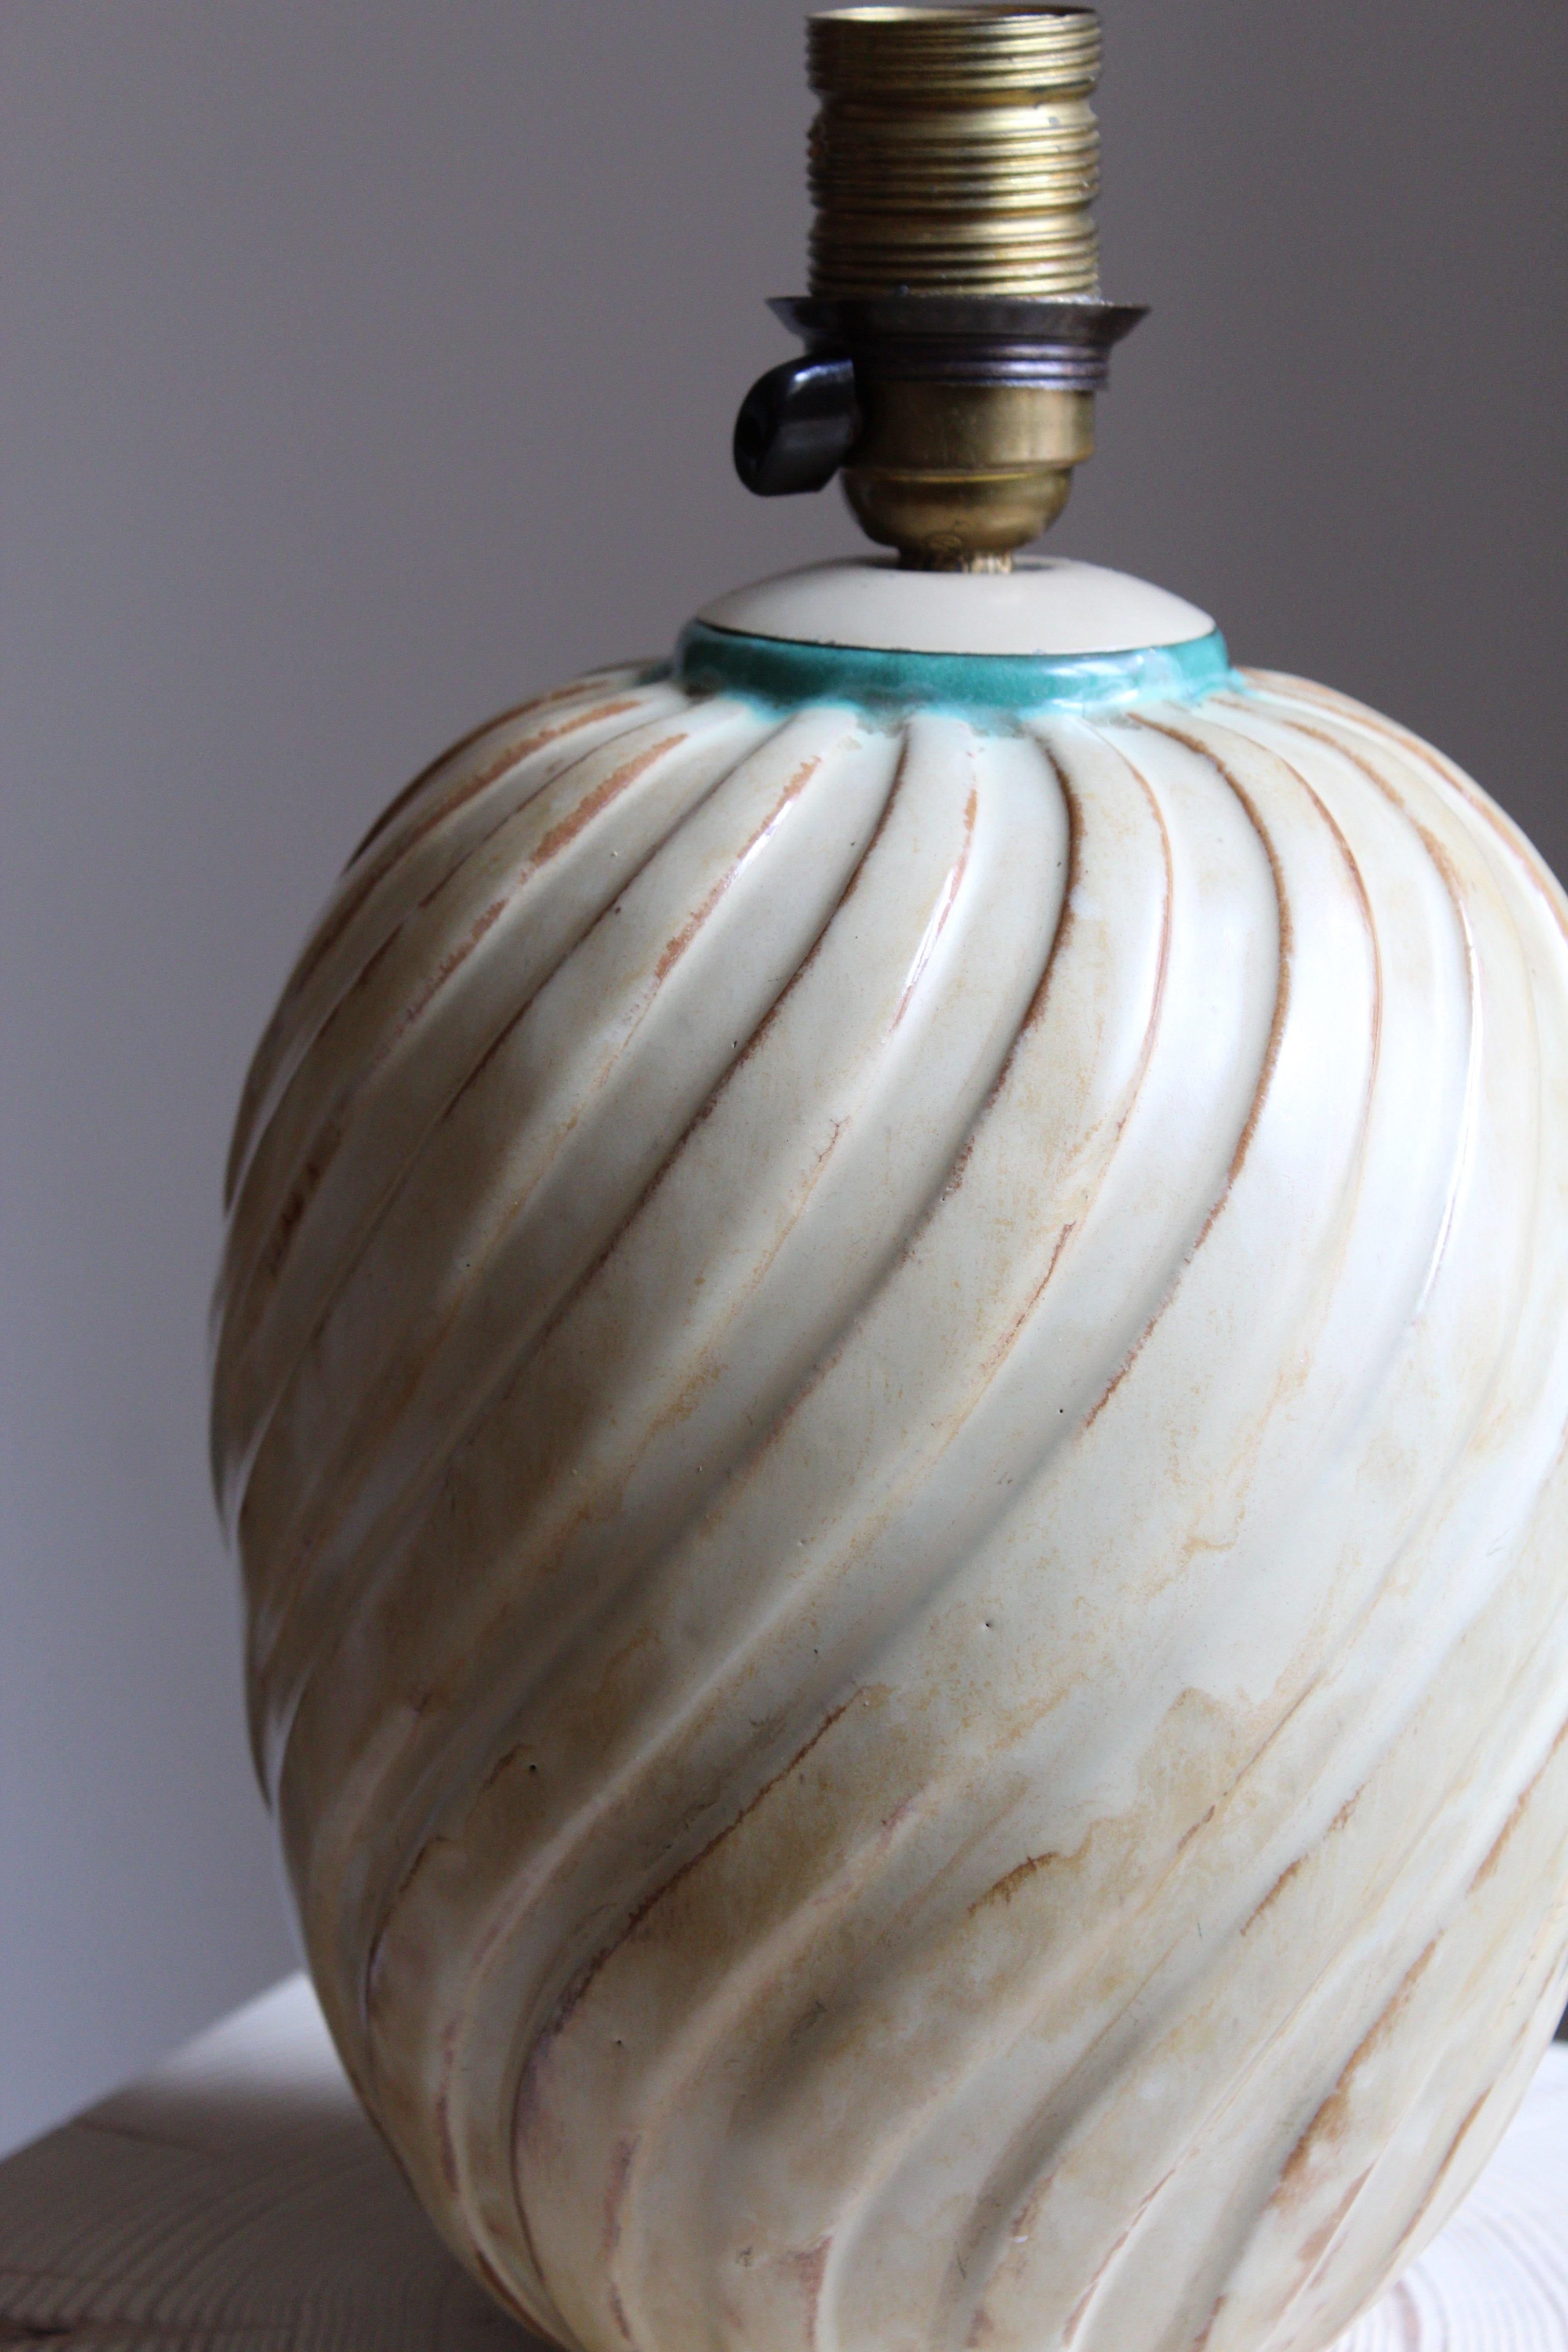 Metal Ekeby, Rare Organic Table Lamp, Glazed Beige / Turquoise Stoneware, Sweden 1930s